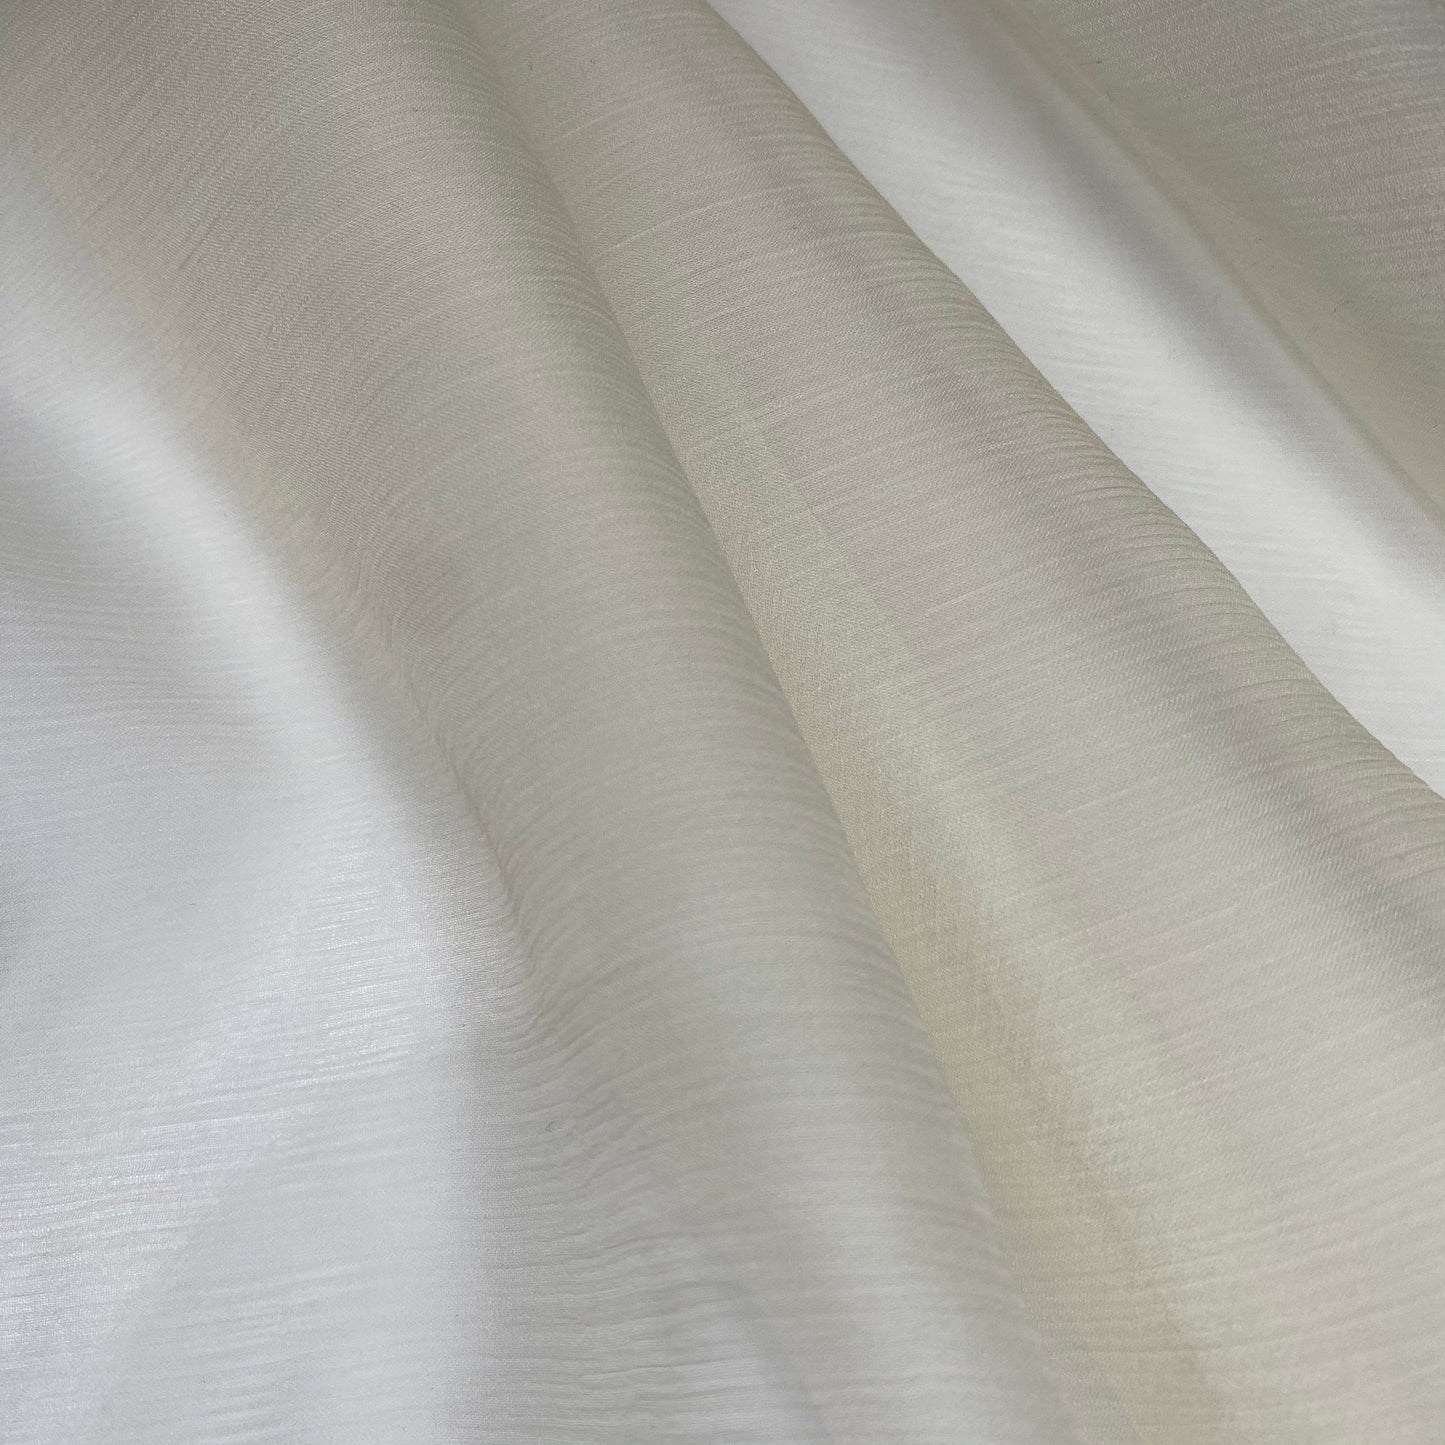 Crinkled Silk Chiffon - Antique White